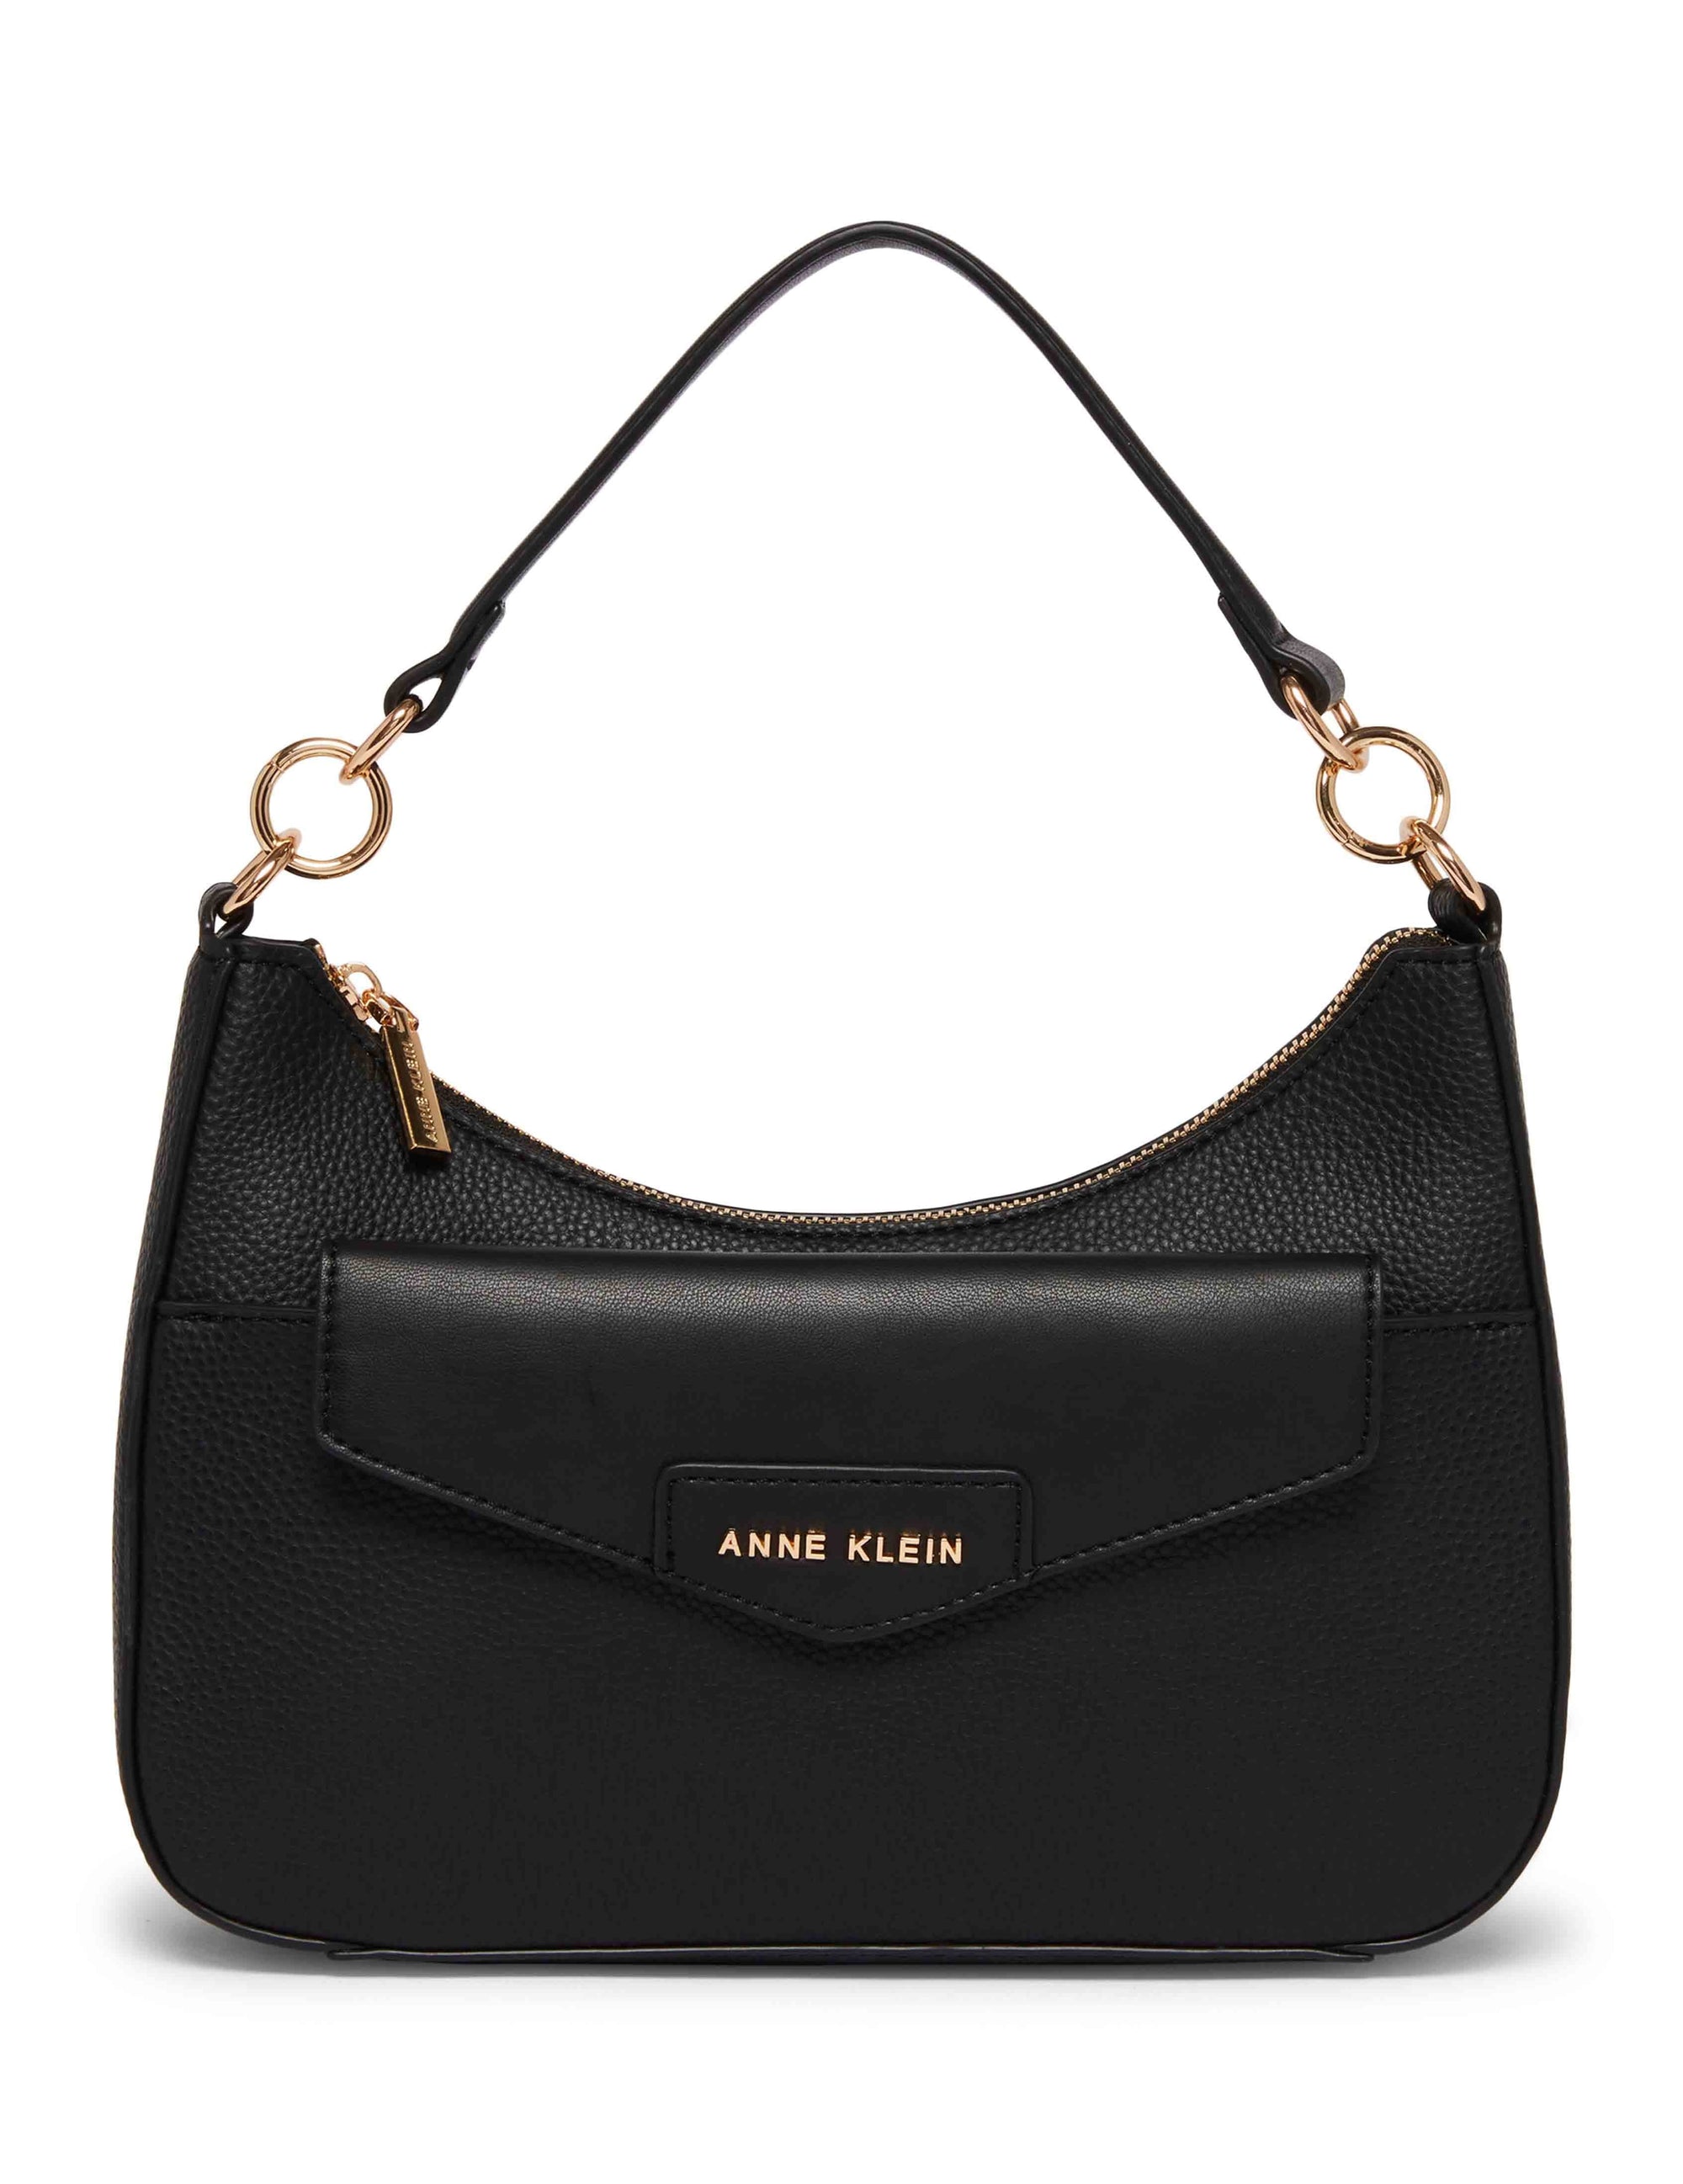 Anne Klein Black/Black/Black-White 2 For 1 Convertible Shoulder Bag With Detachable Pouch